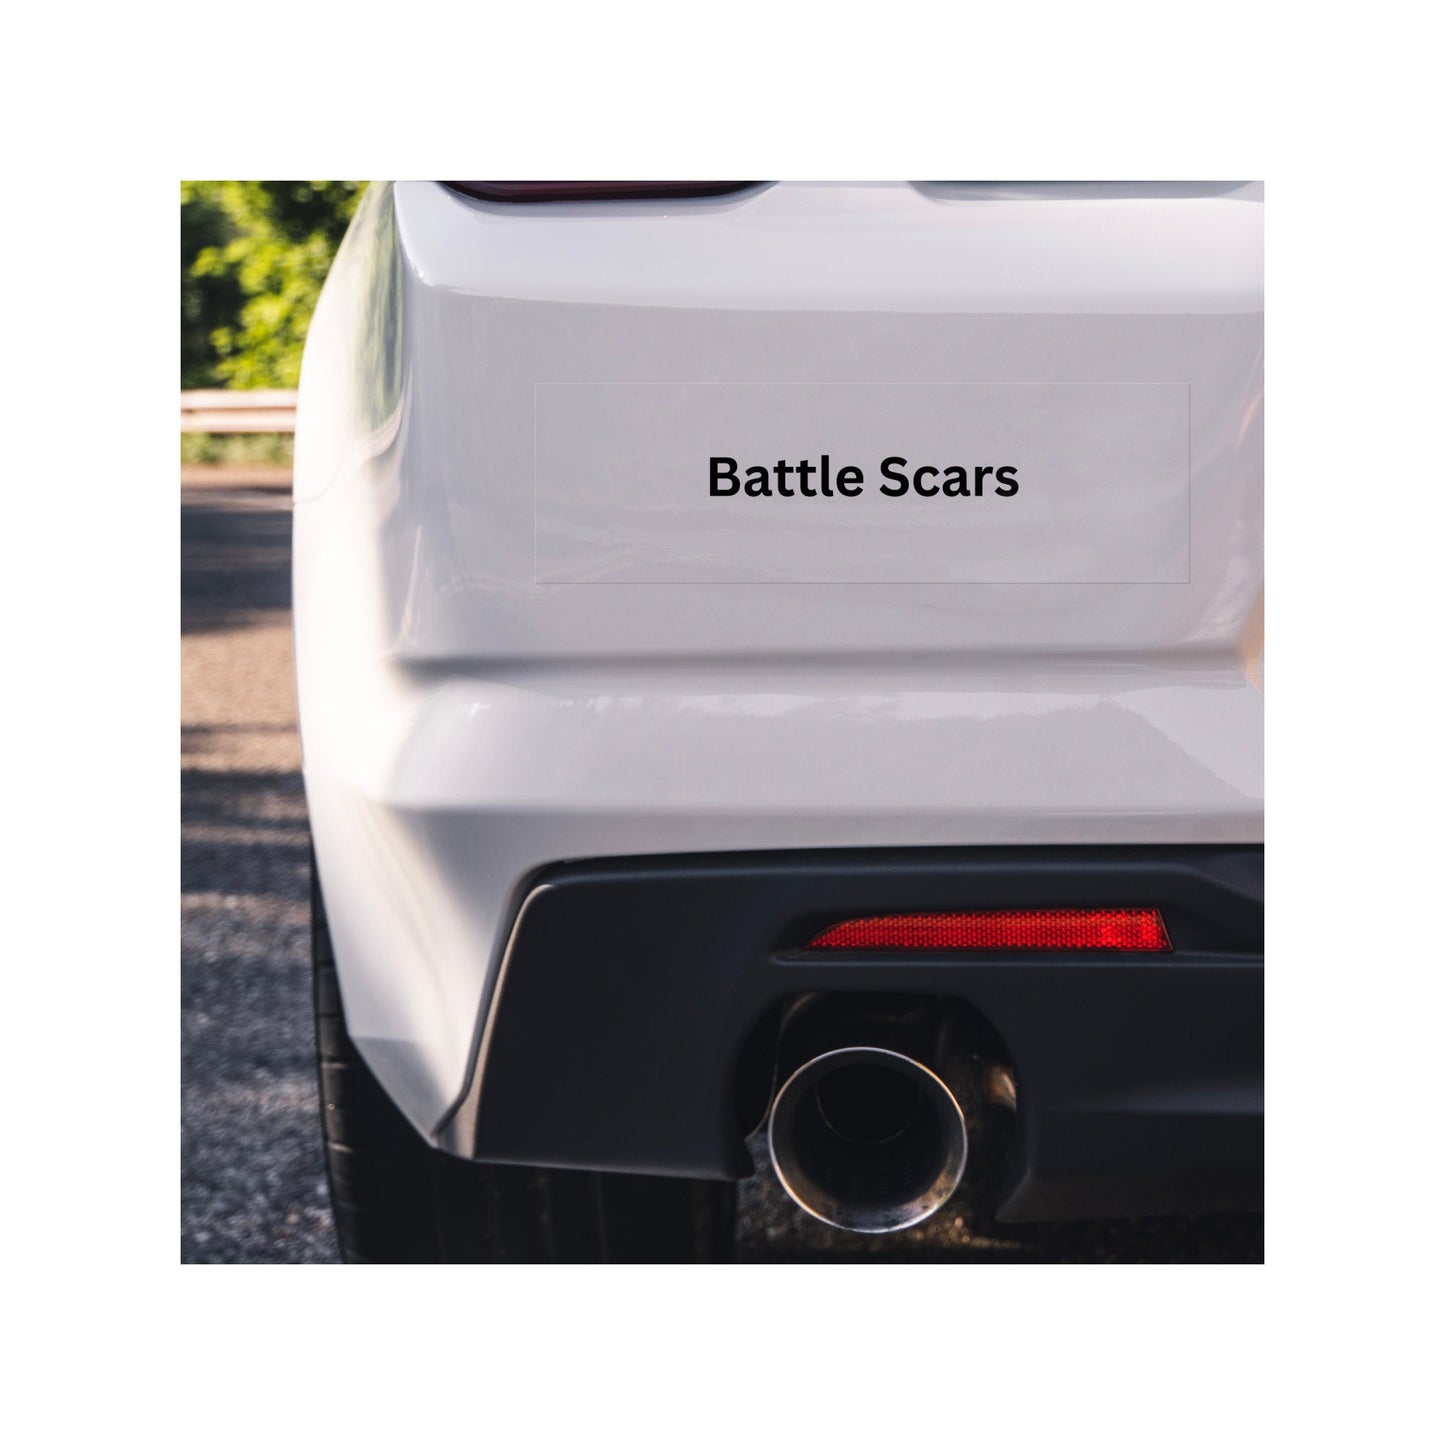 Funny Bumper Stickers, Battle Scars Decal, Car Accessories, Funny Car Vinyl